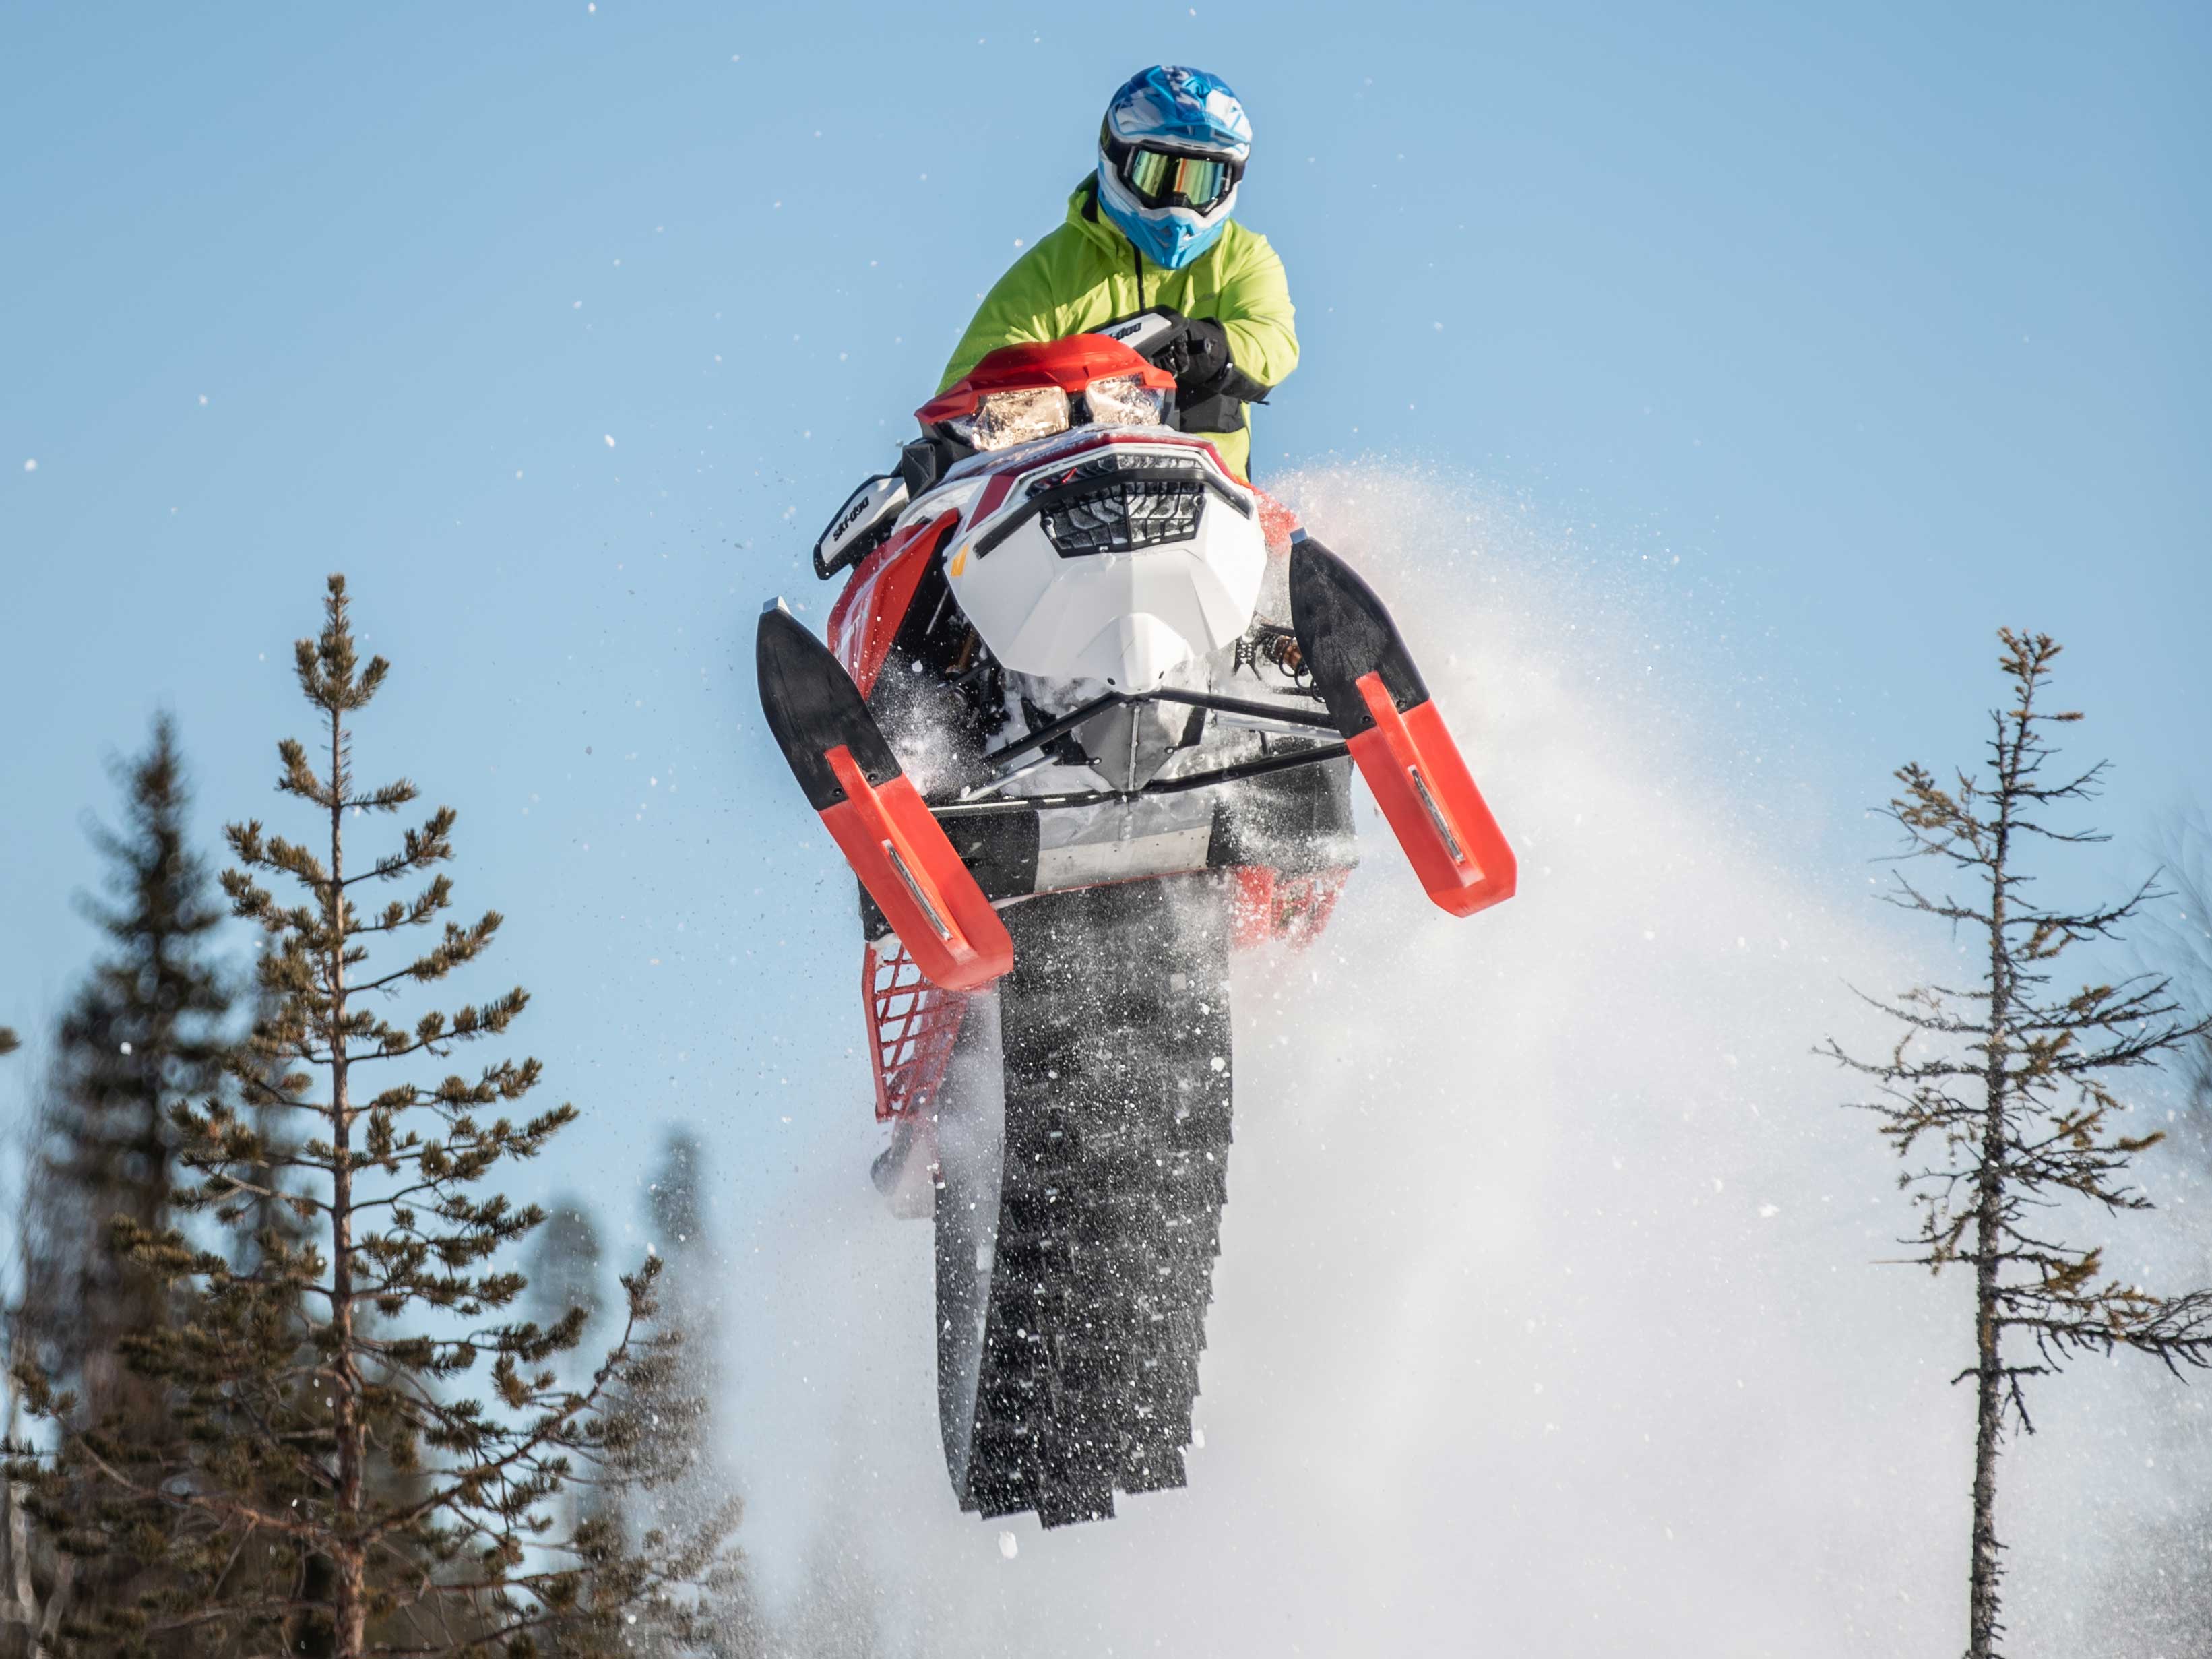 Rasmus Johansson jumping with his Ski-Doo